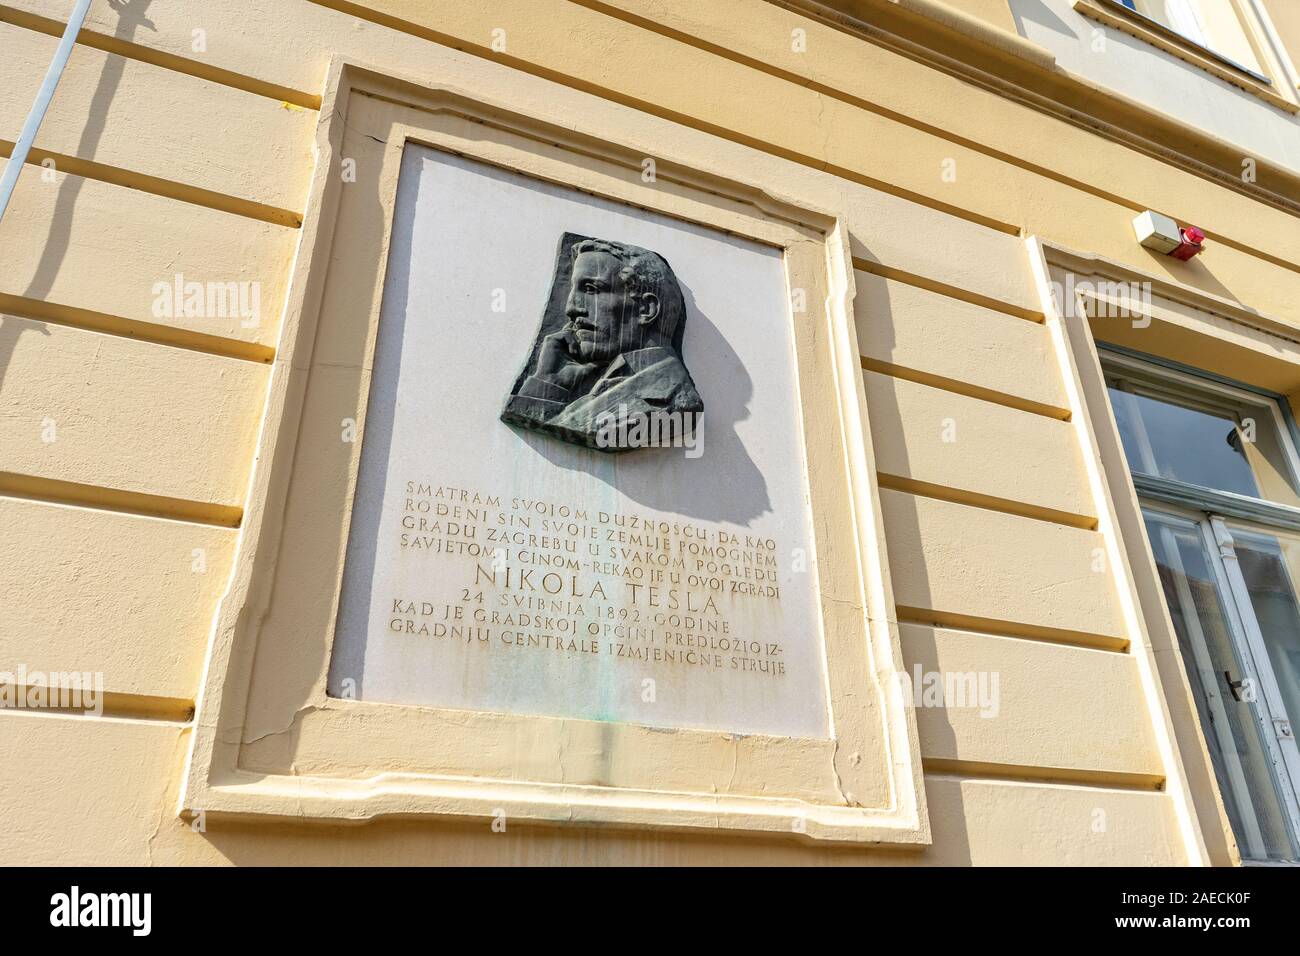 nikola tesla - memorial plaque Stock Photo - Alamy